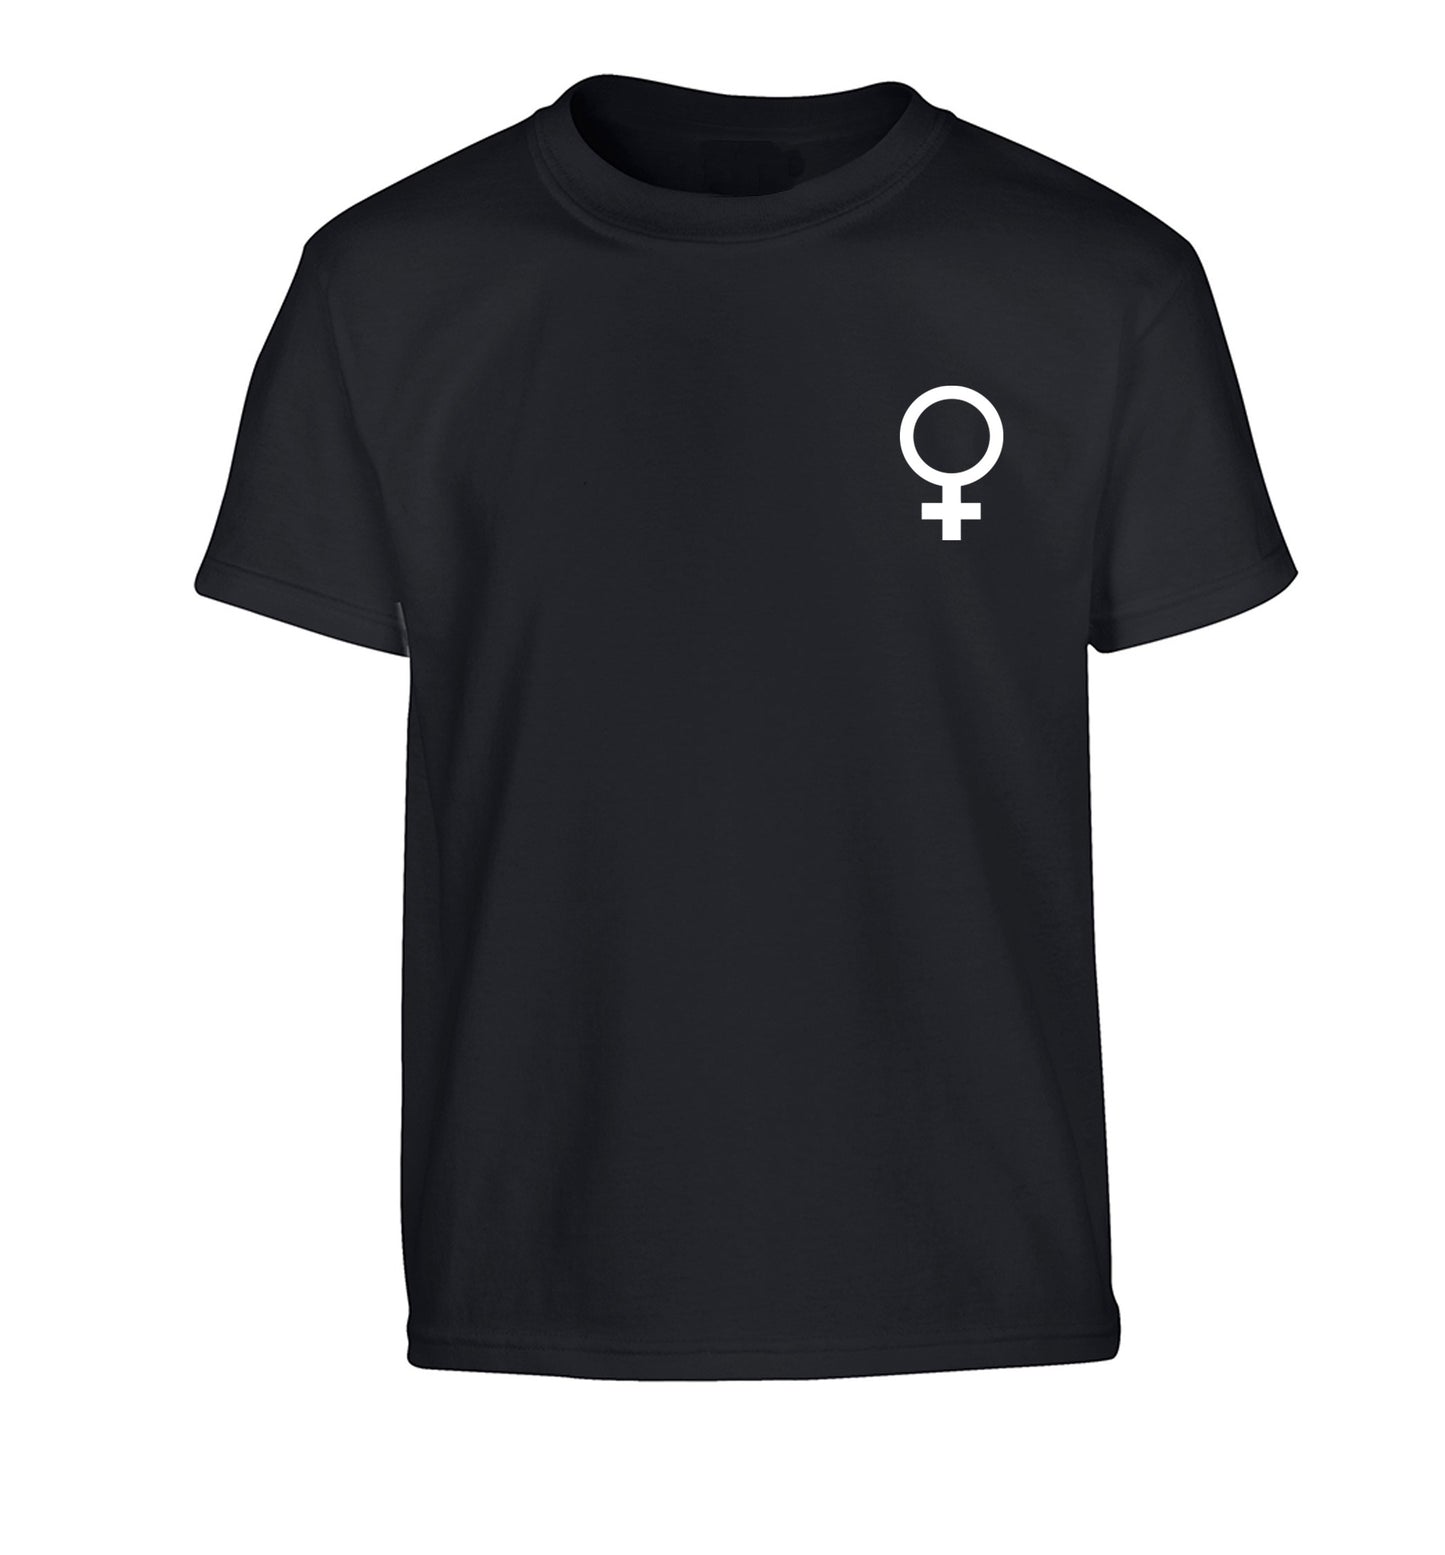 Female pocket symbol Children's black Tshirt 12-14 Years